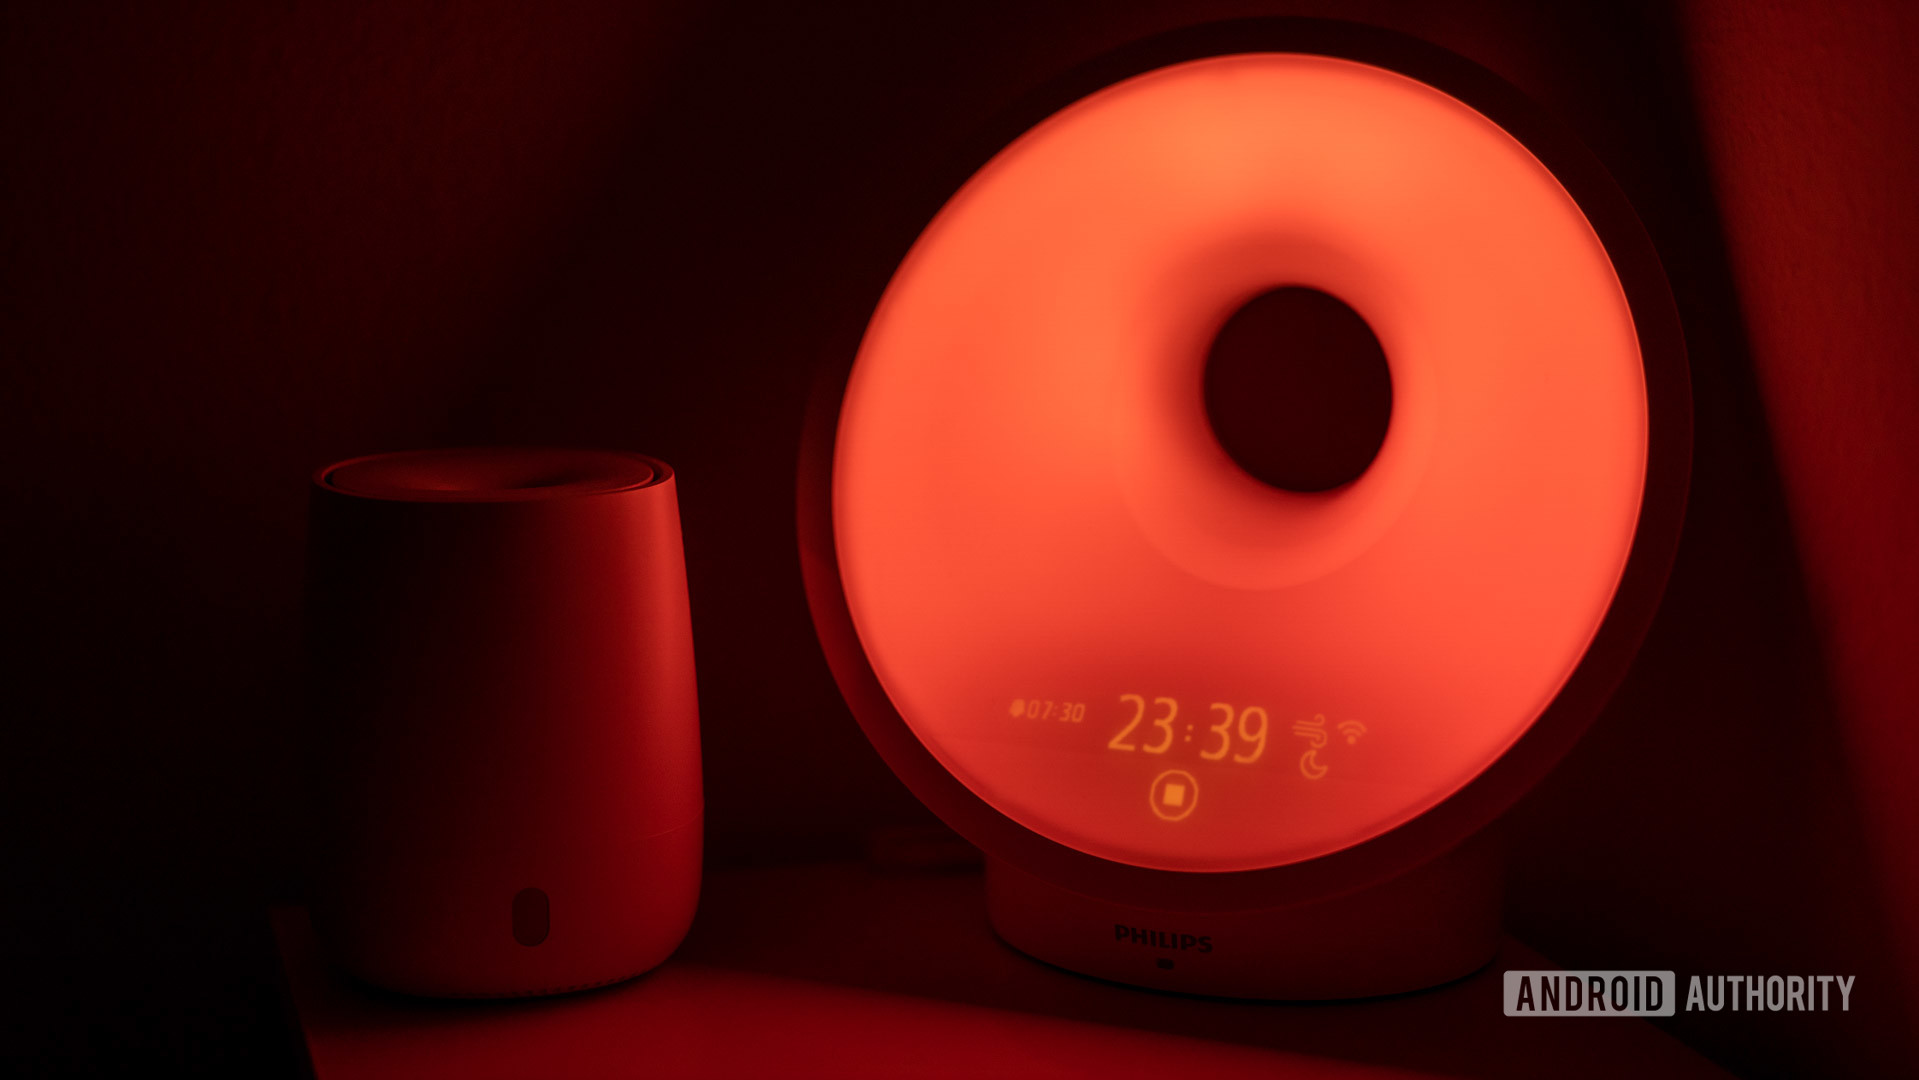 Philips SmartSleep Light The alarm clock